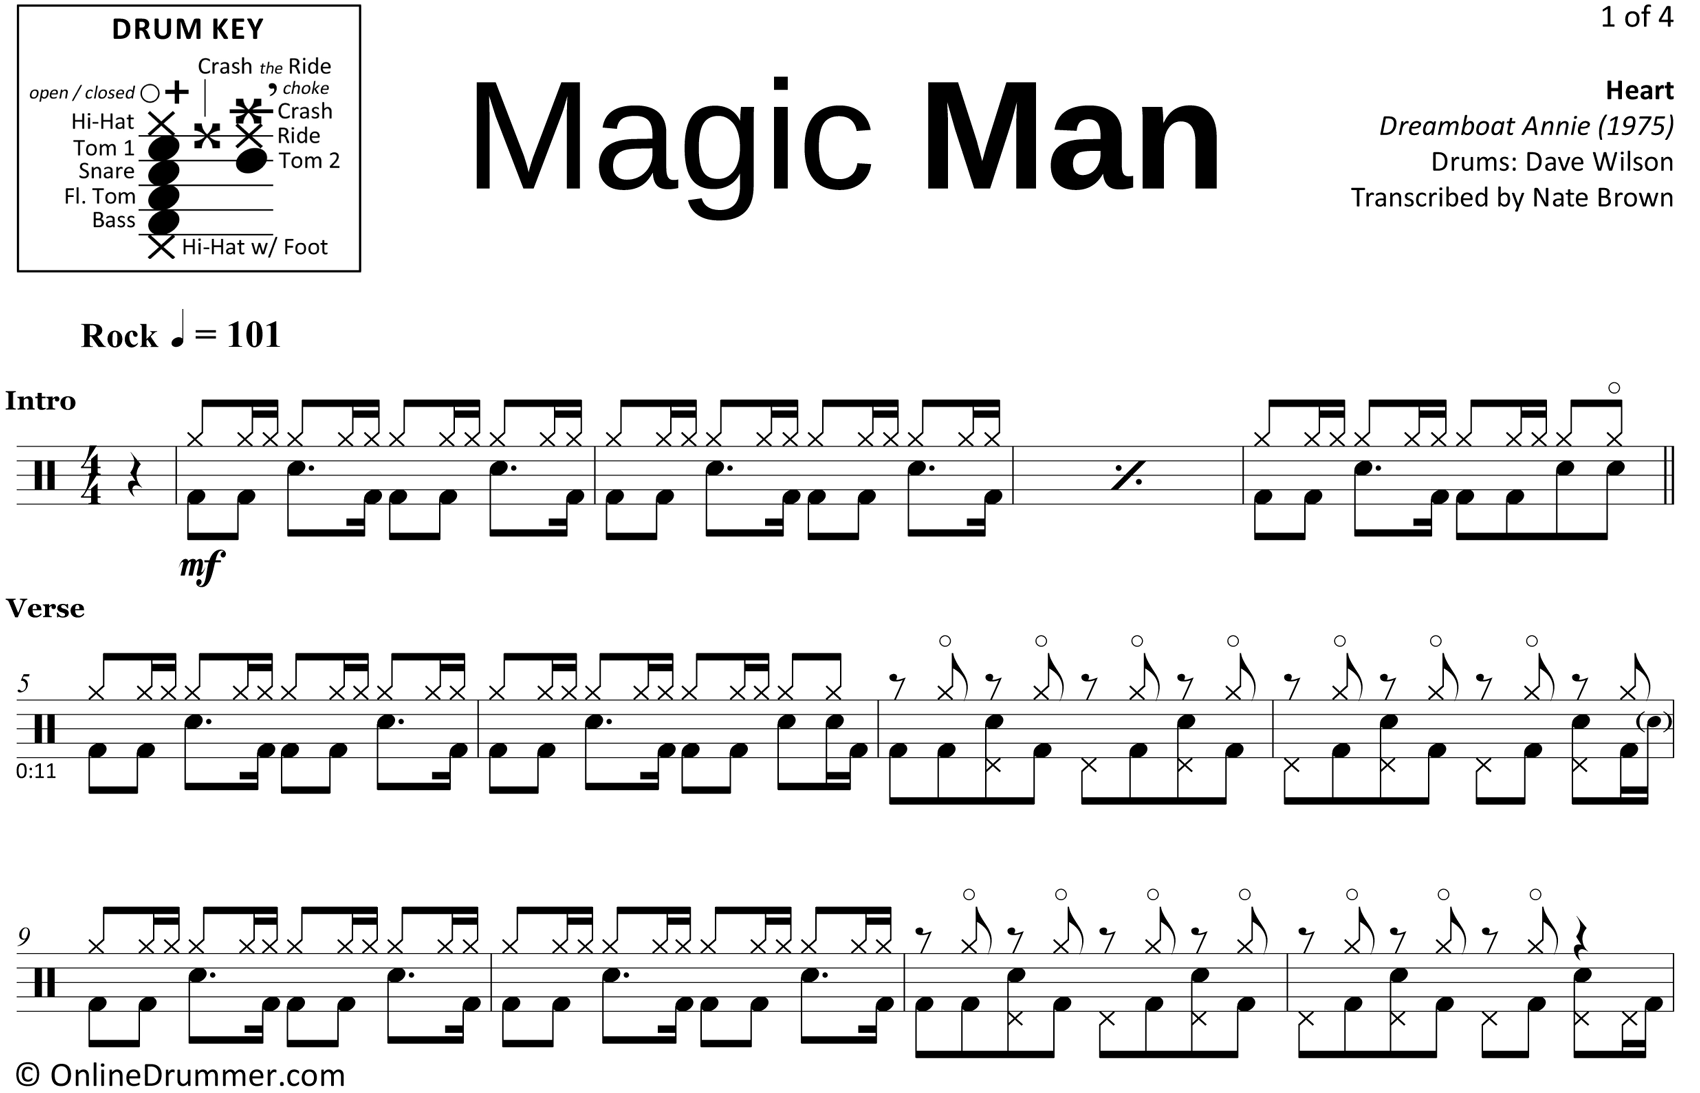 Magic Man - Heart - Drum Sheet Music